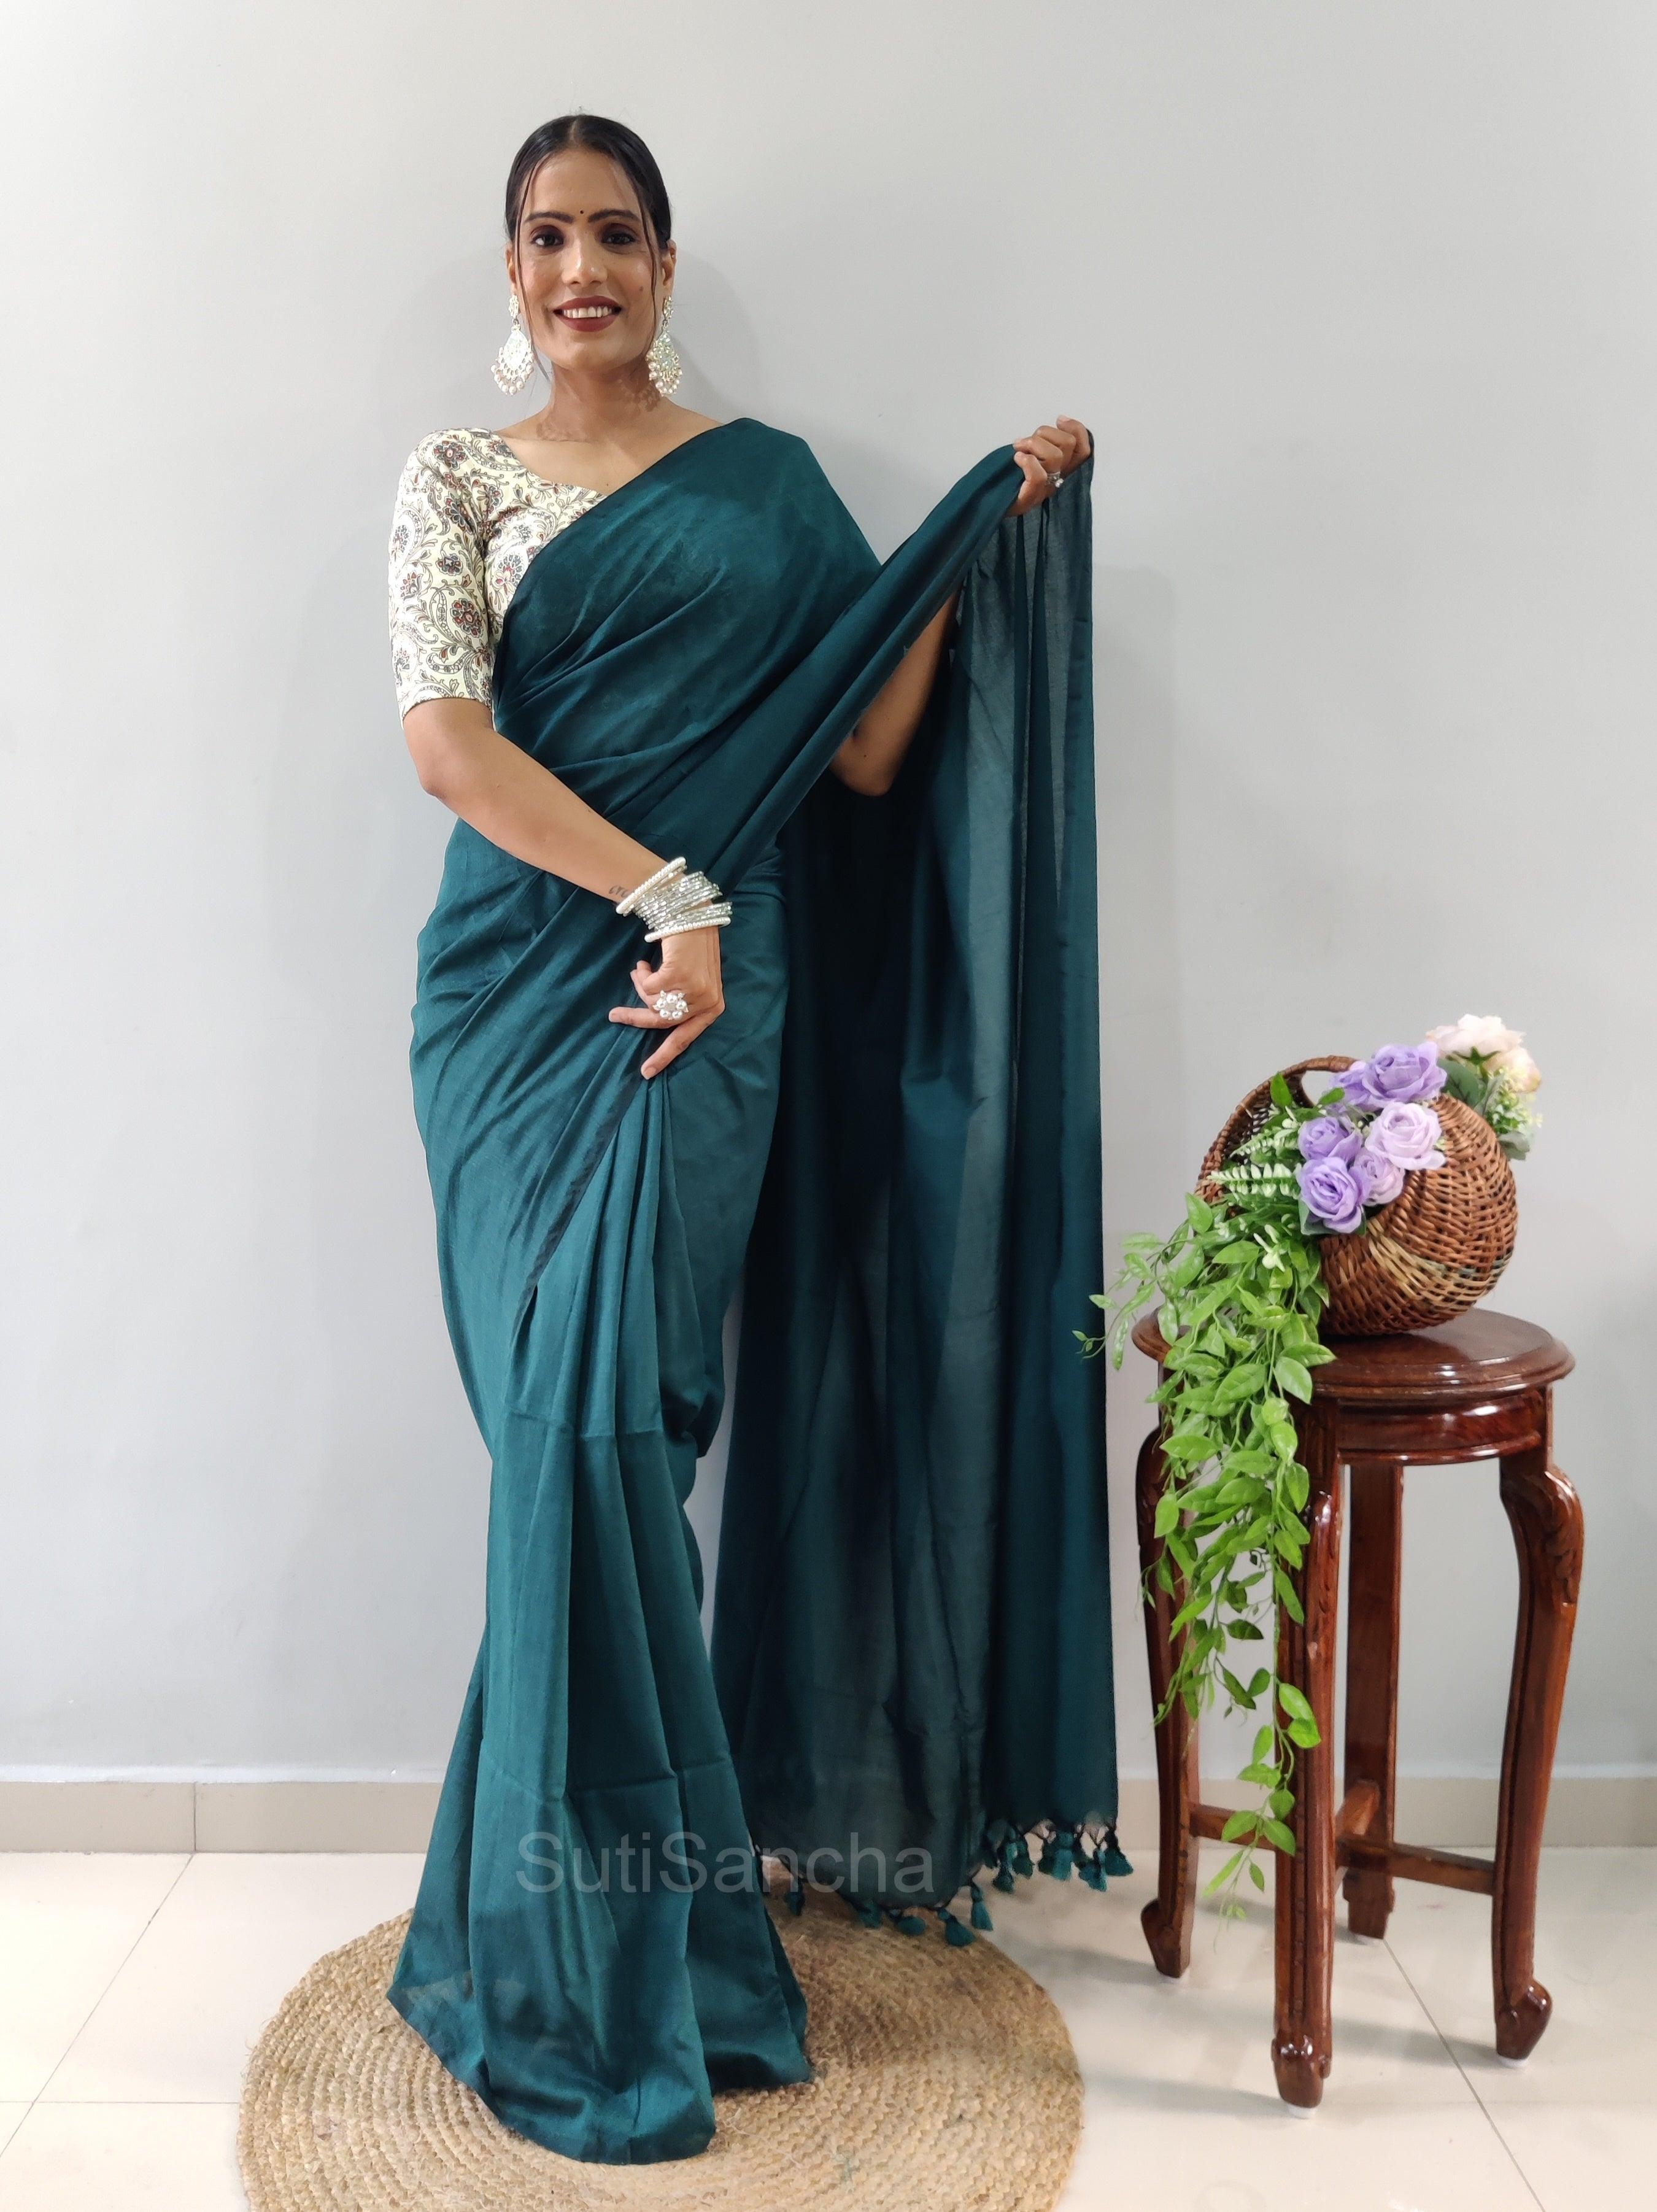 Sutisancha Rama Khadi Saree & designer Blouse - Suti Sancha